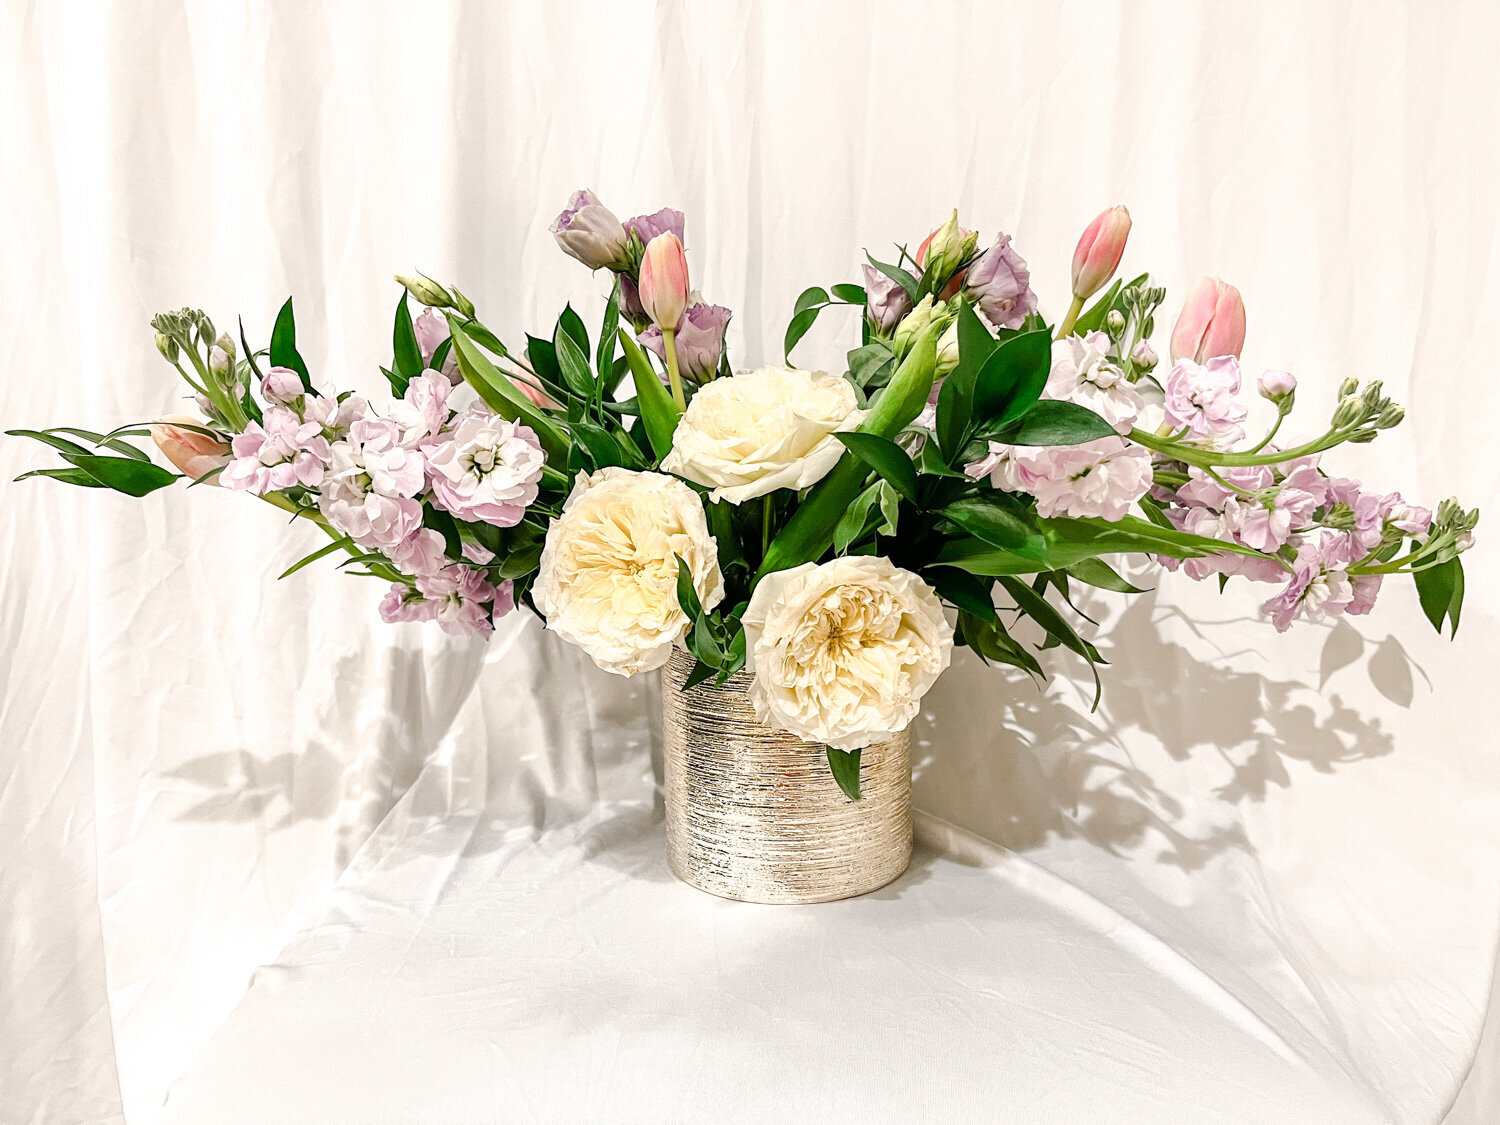 Flower centerpiece with white background